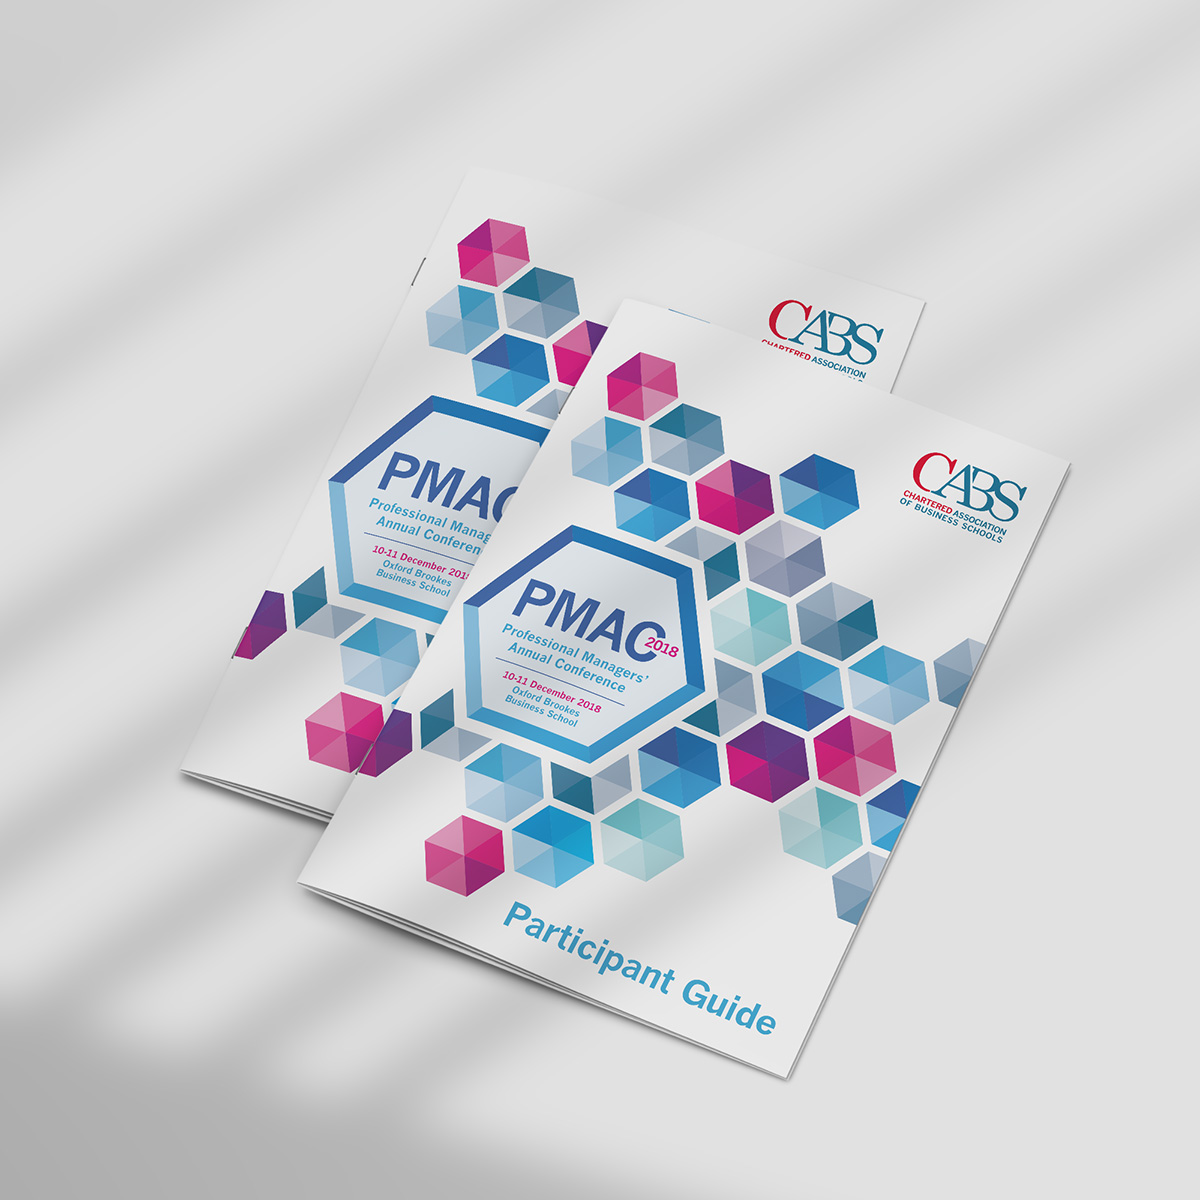 CABS PMAC Event Guide Book Design